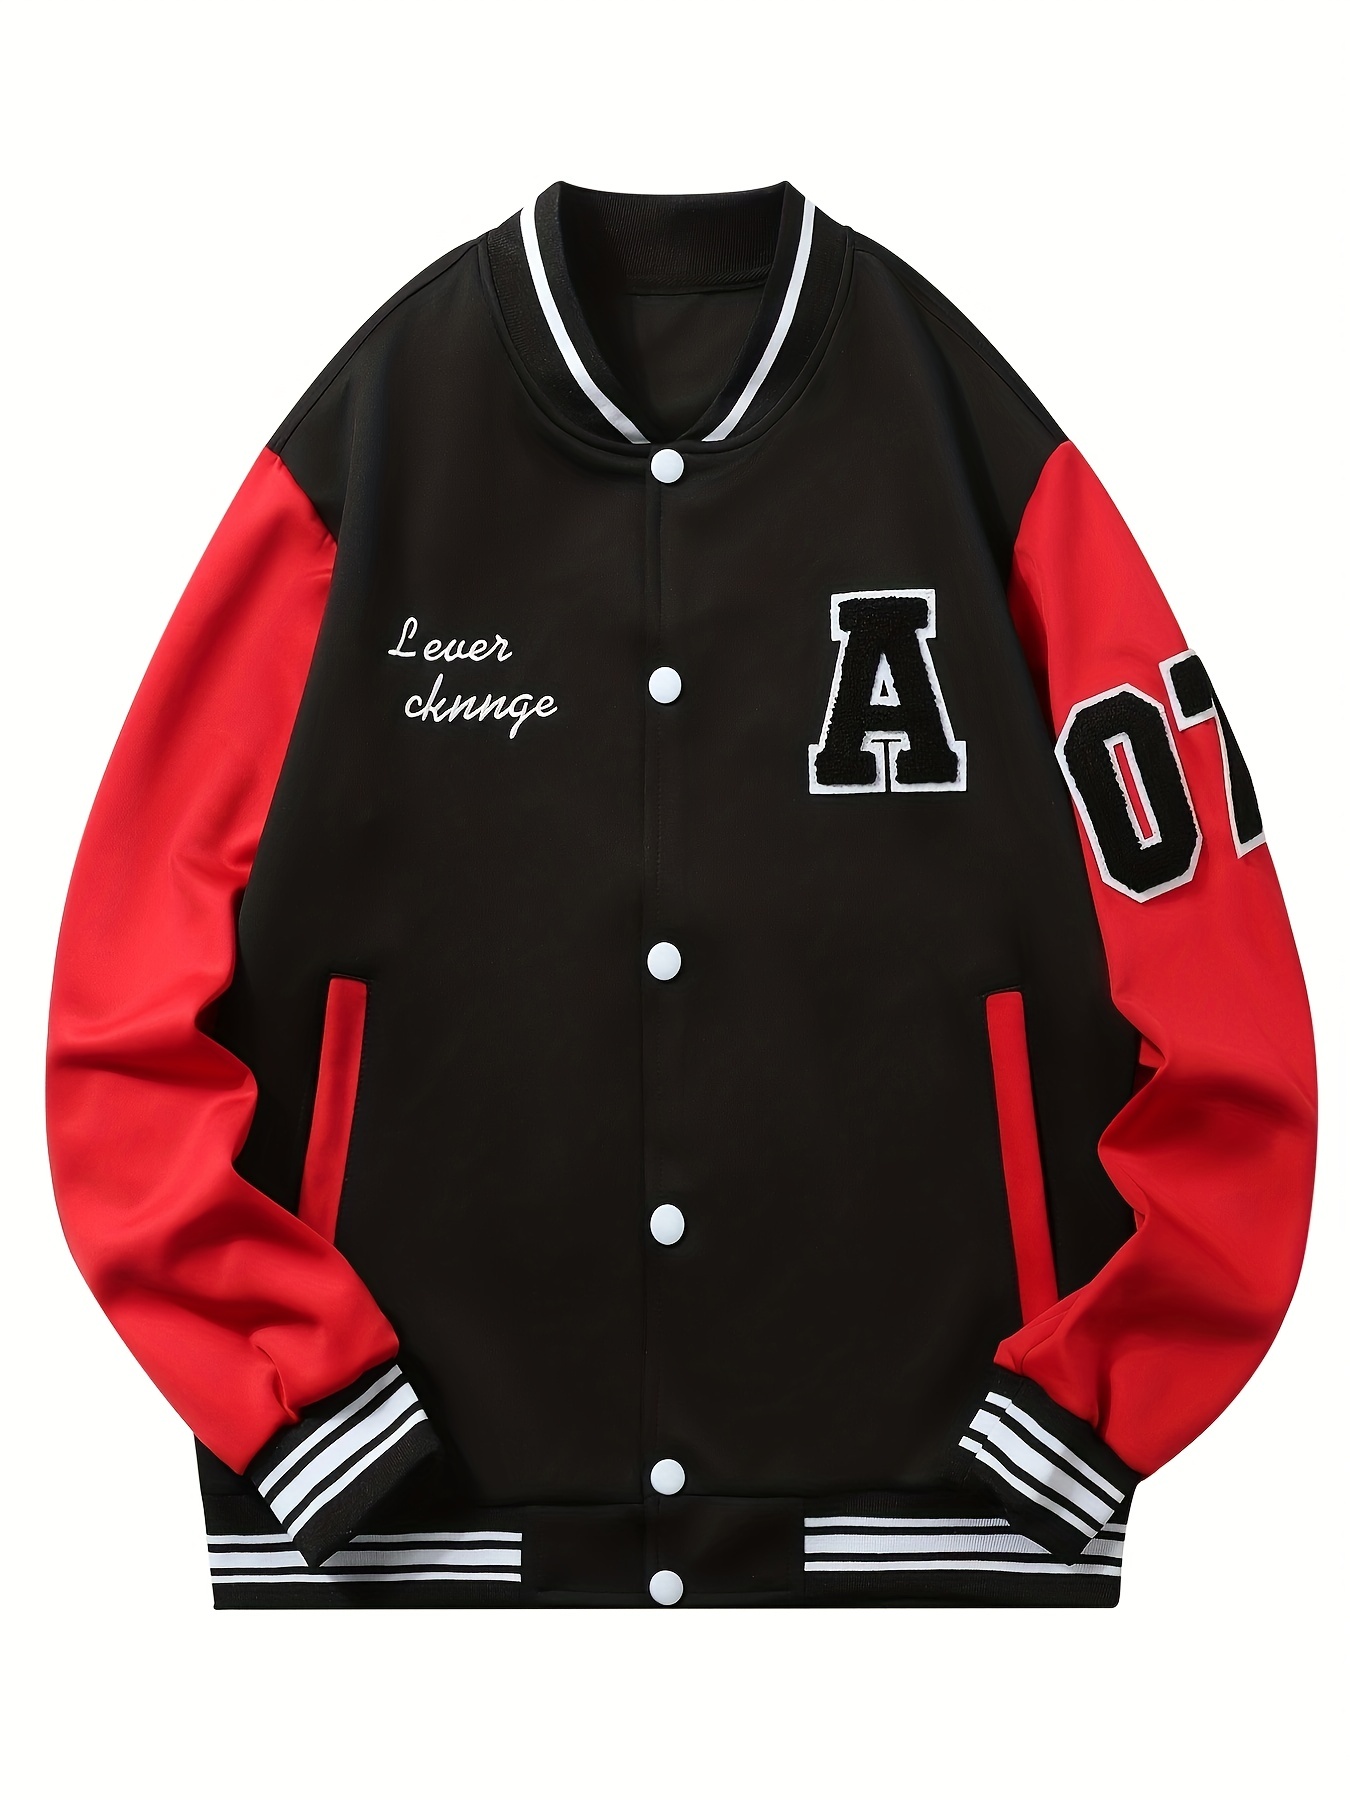 vintage mens baseball jacket stylish windproof outdoor jacket